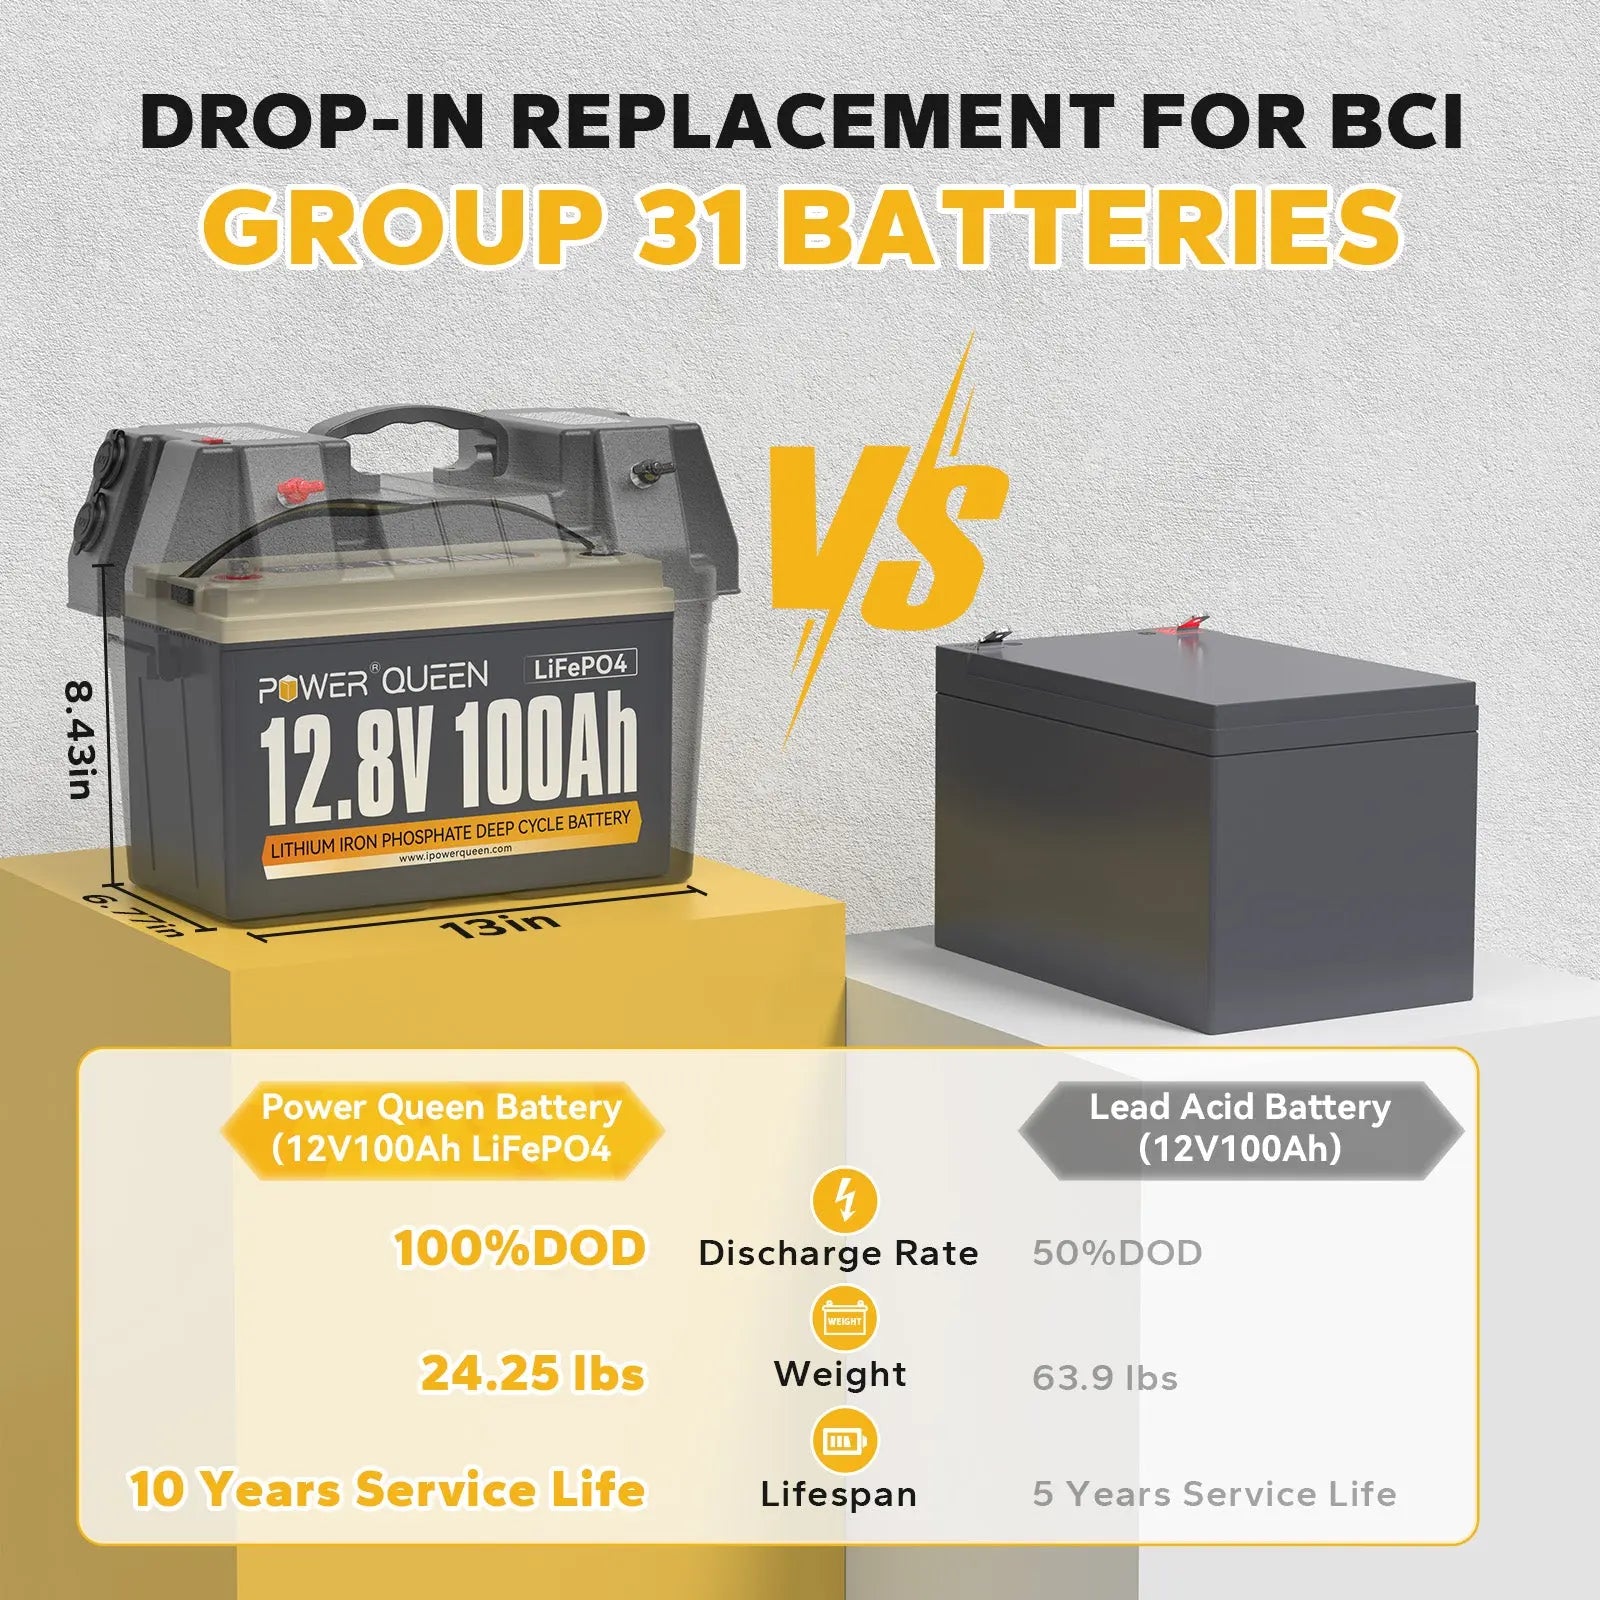 [Only $229.99] Power Queen 12.8V 100Ah LiFePO4 Battery, Built-in 100A BMS, Match BCI Group 31 Battery Box Power Queen